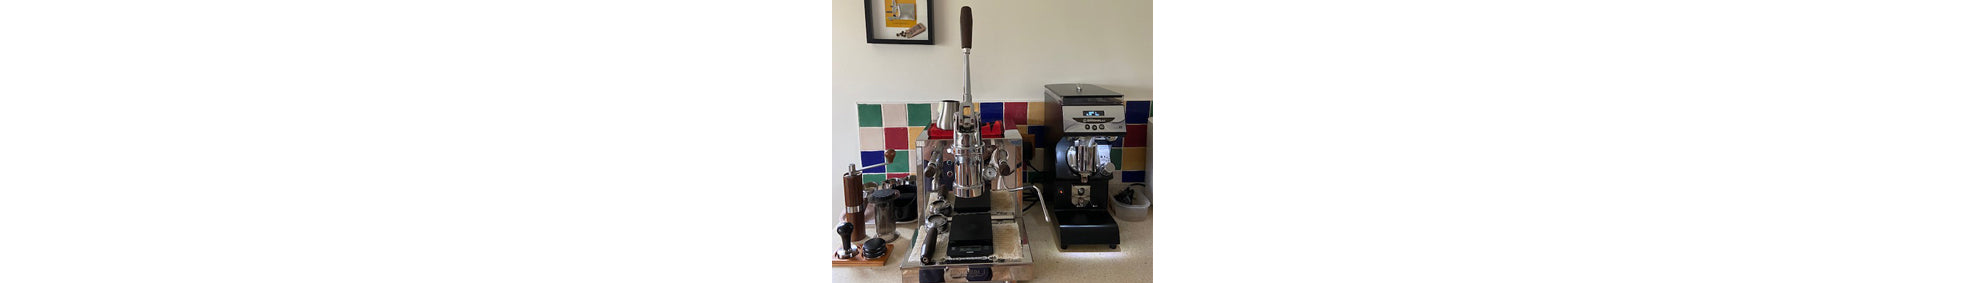 Subscriber Coffee Equipment Showcase